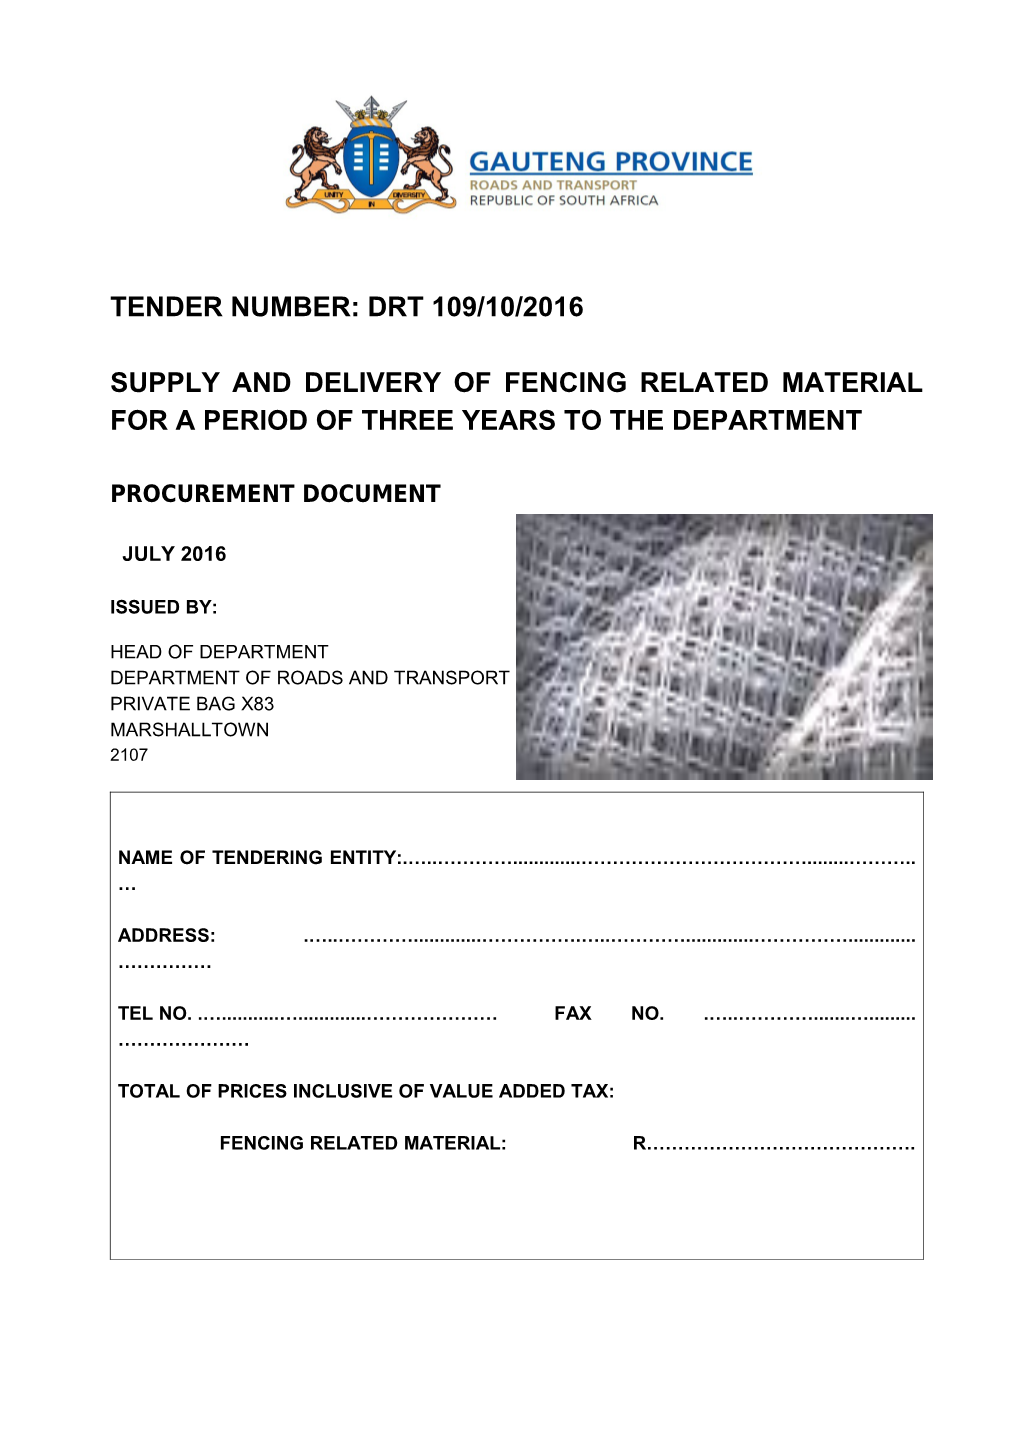 CIDB Procurement Document (08/2006)